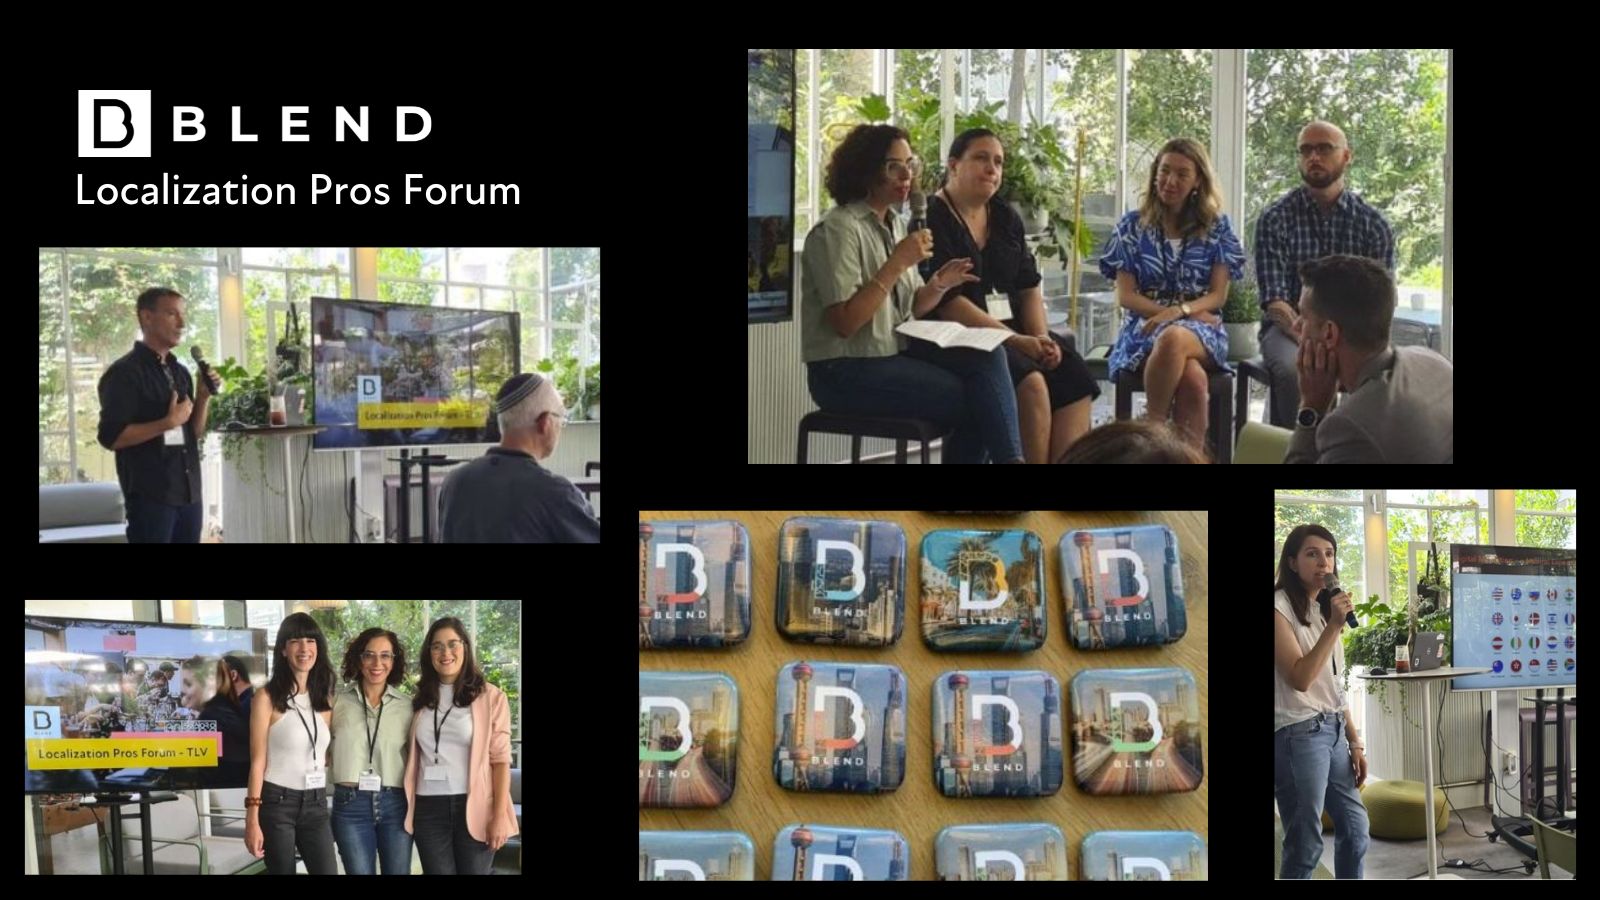 BLEND Hosts Localization Pros Forum in Tel Aviv